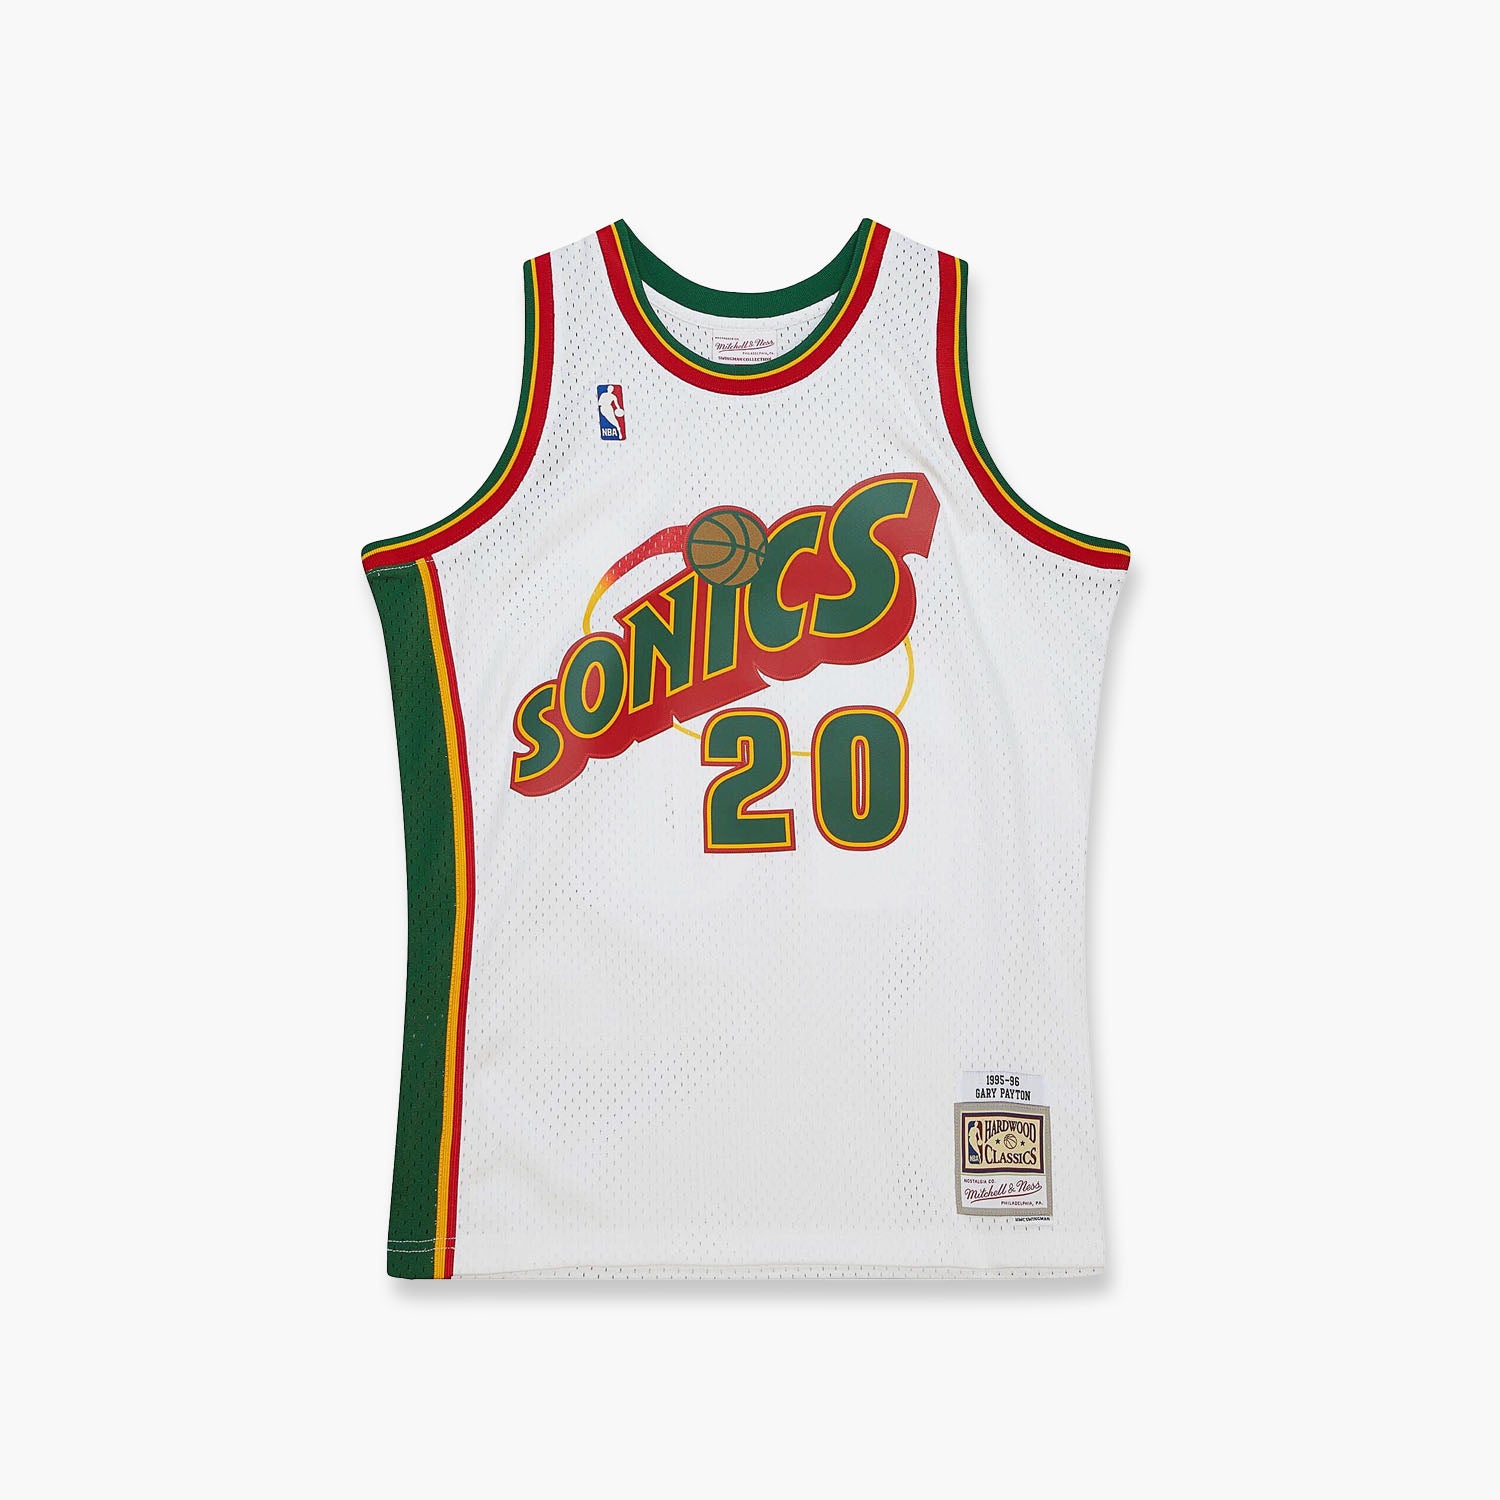 Gary Payton Seattle Supersonics NBA Jerseys for sale